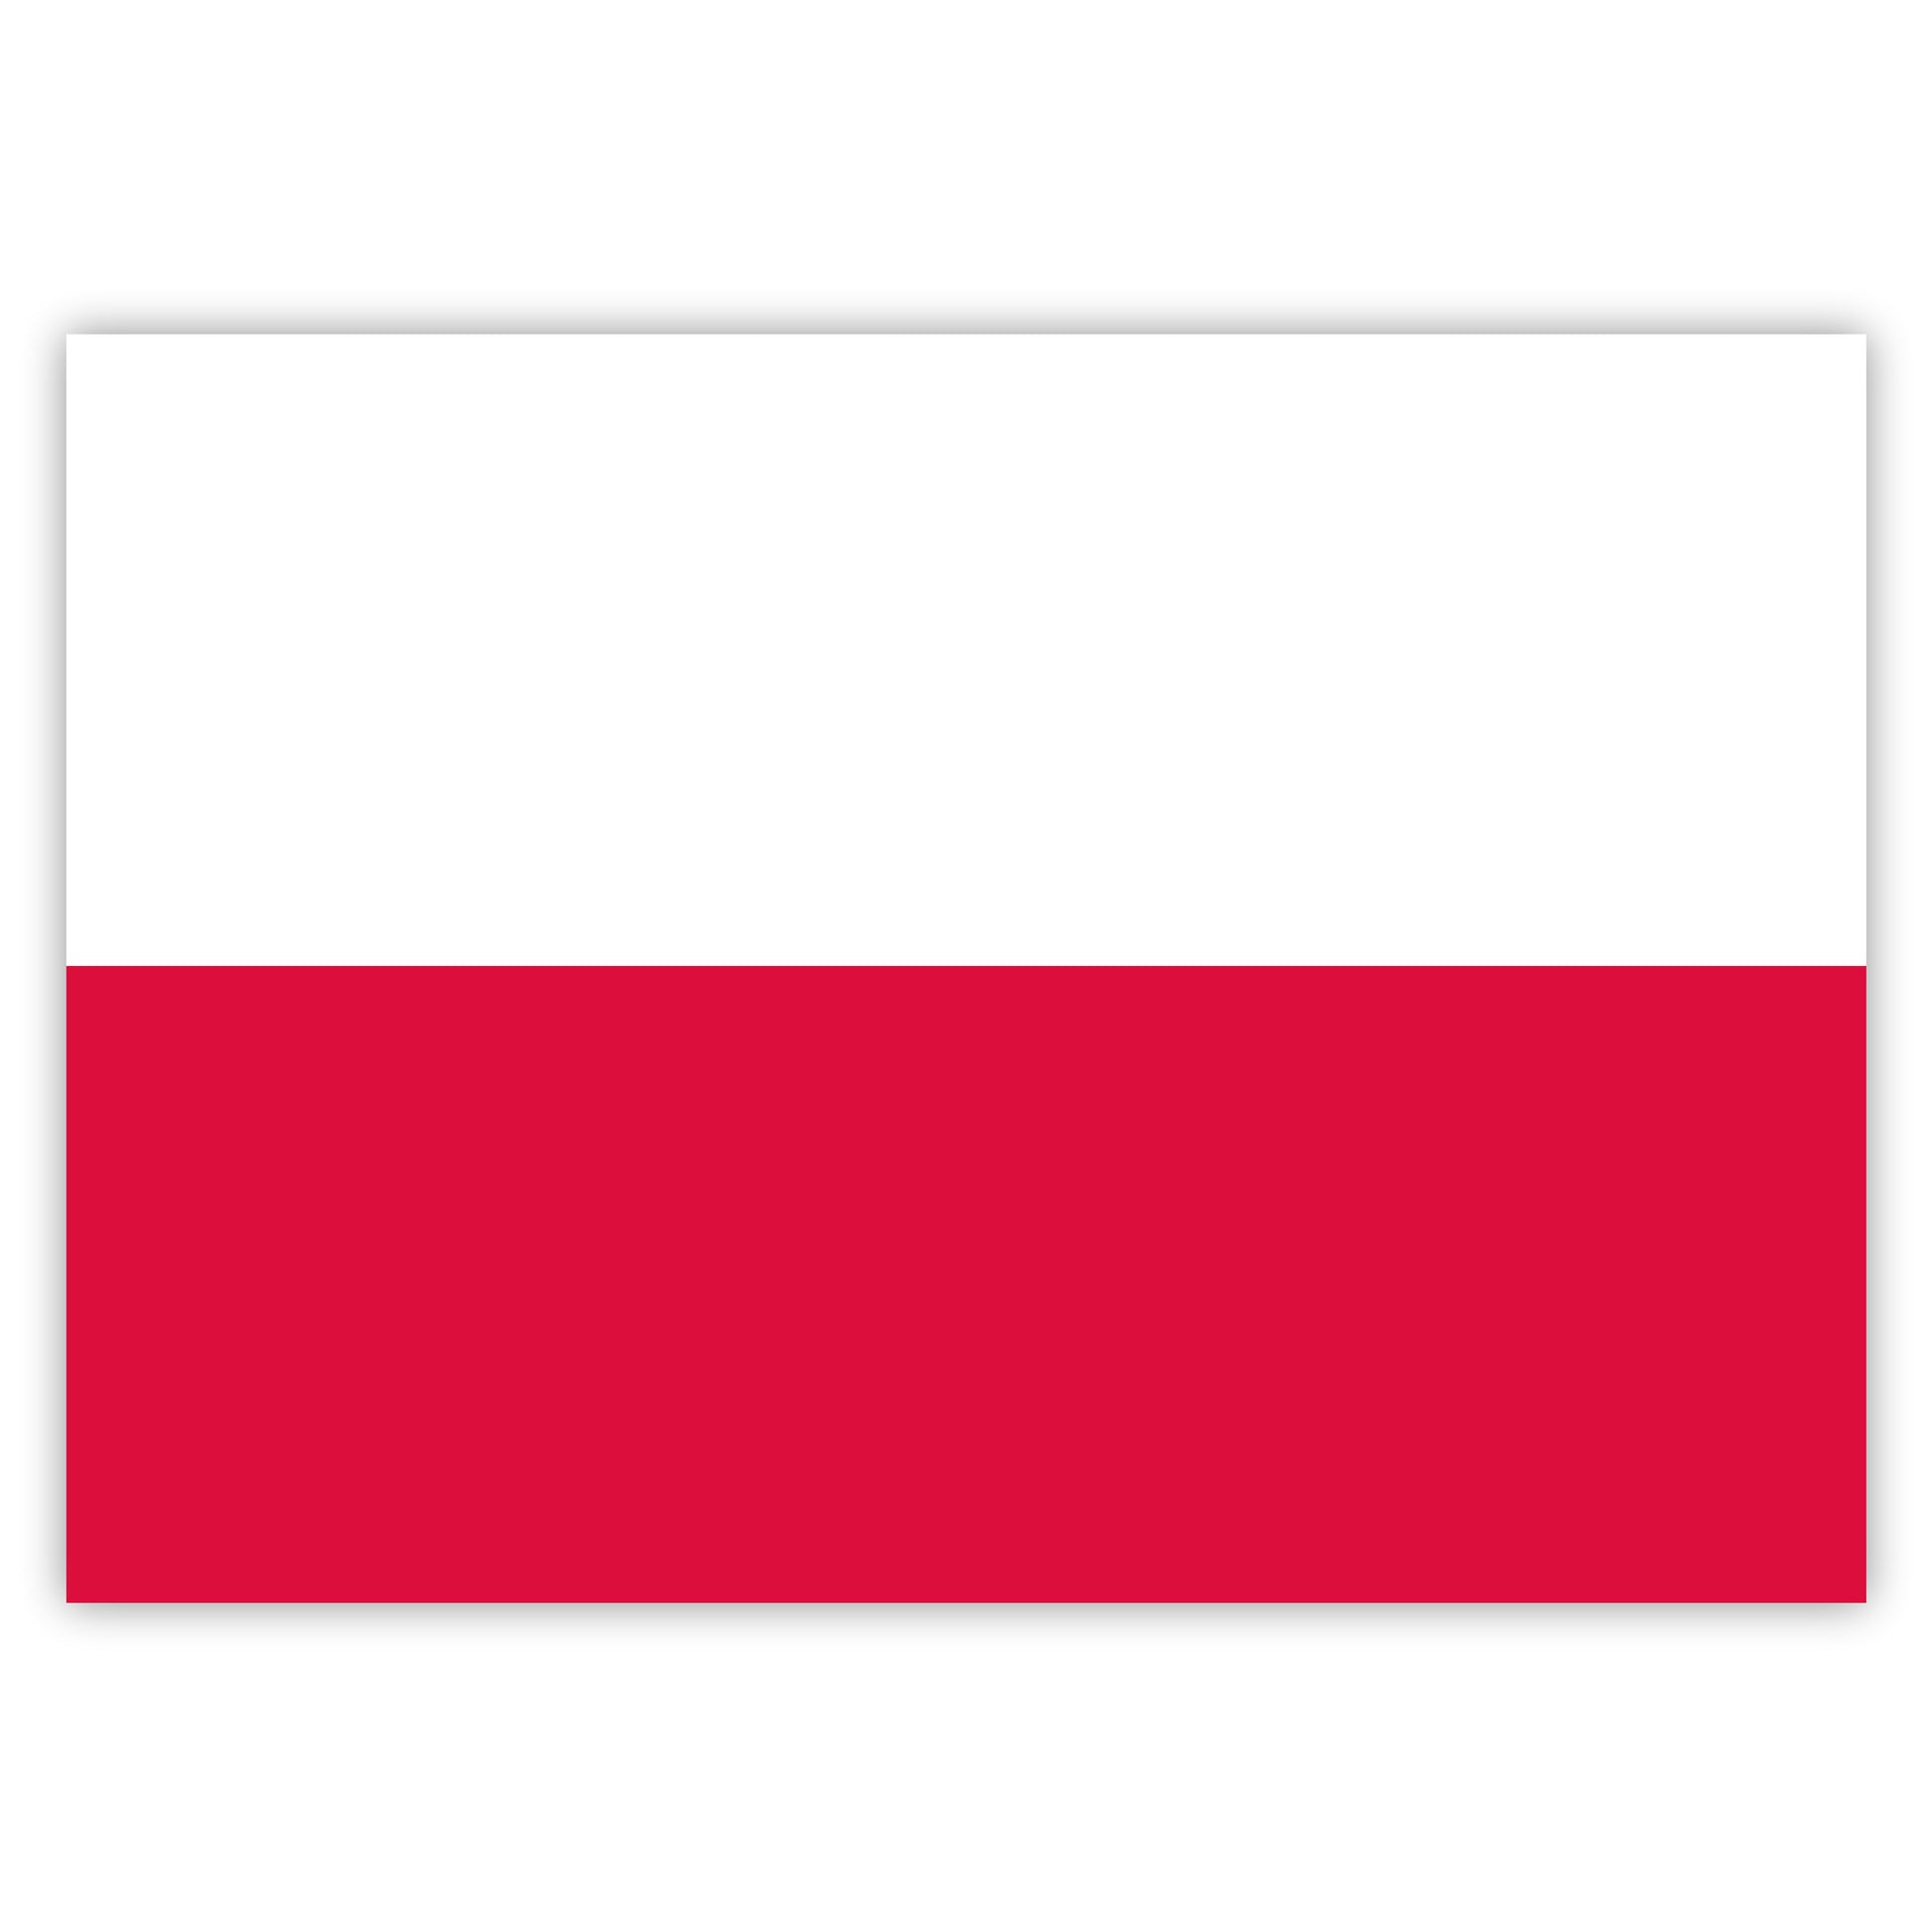 Aufkleber Polen-Flagge